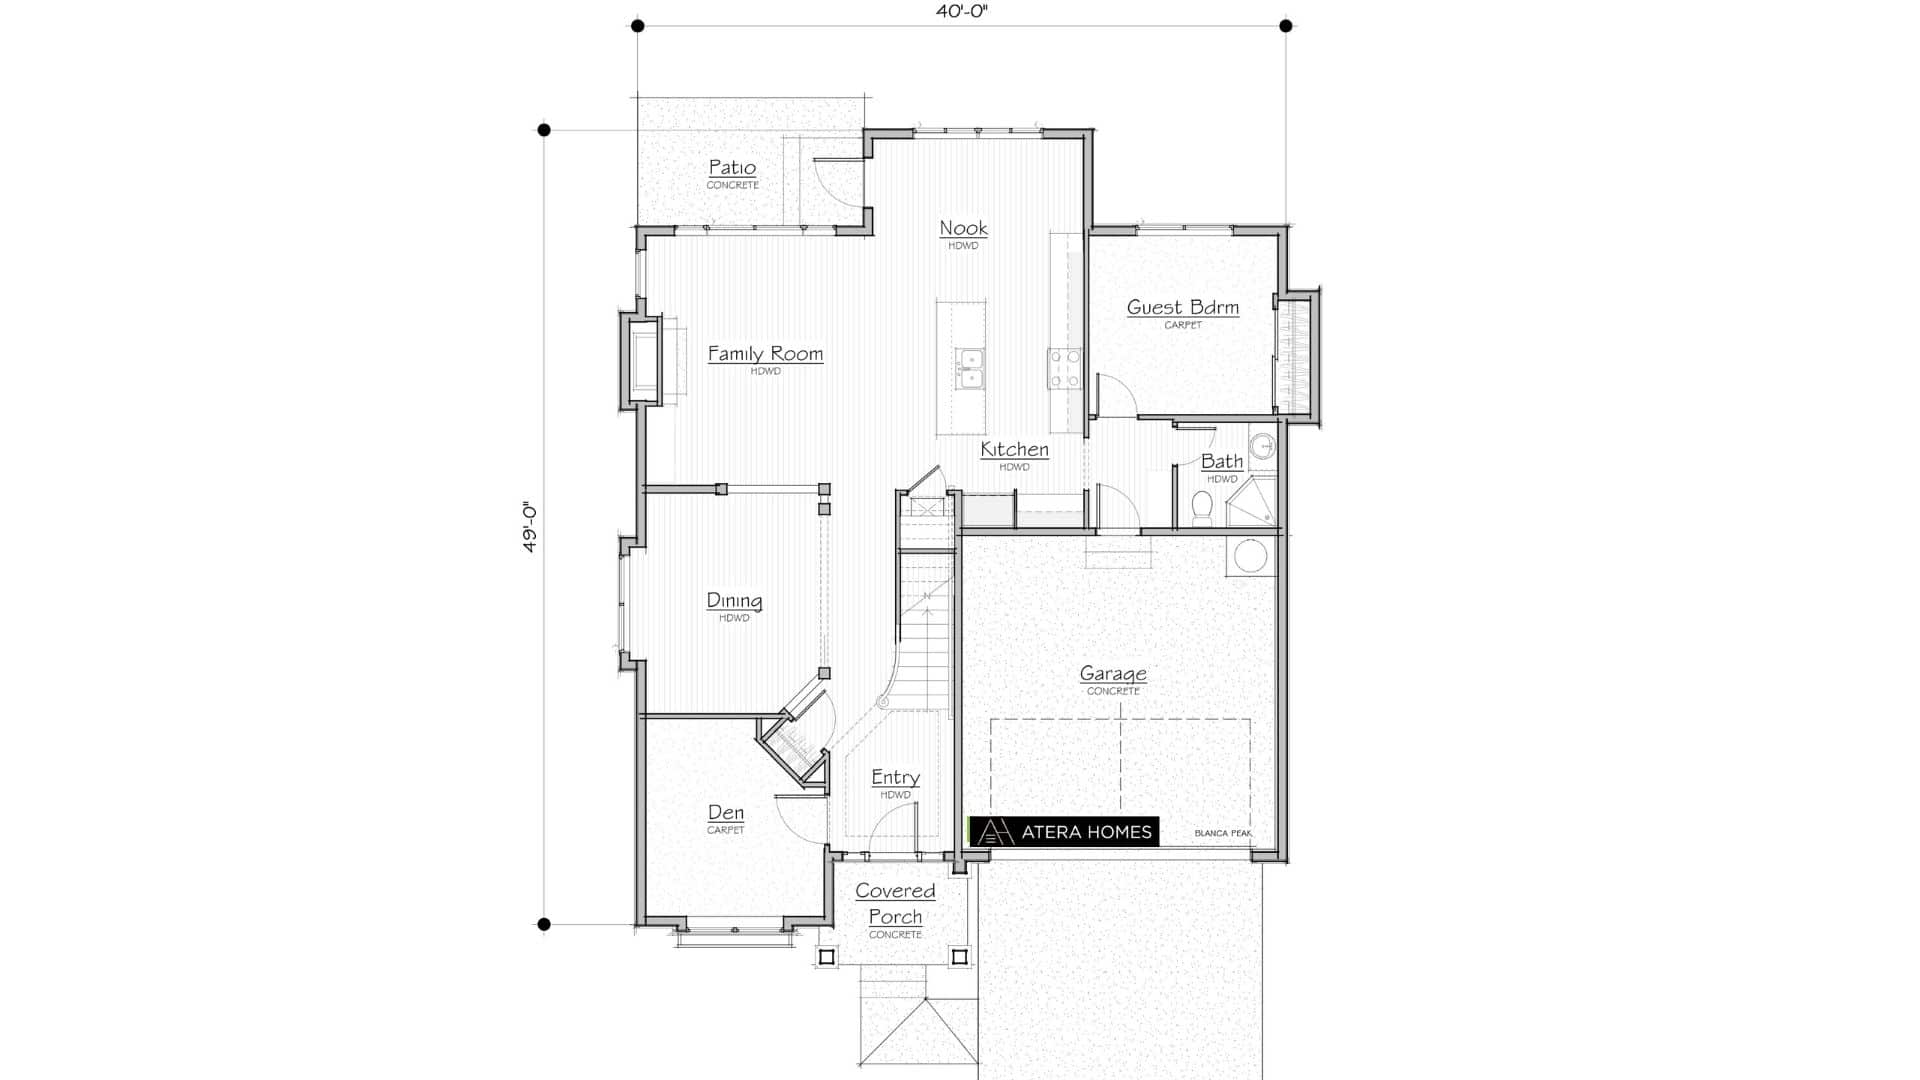 Blanca Peak IIc - Floor Plan - Level 1